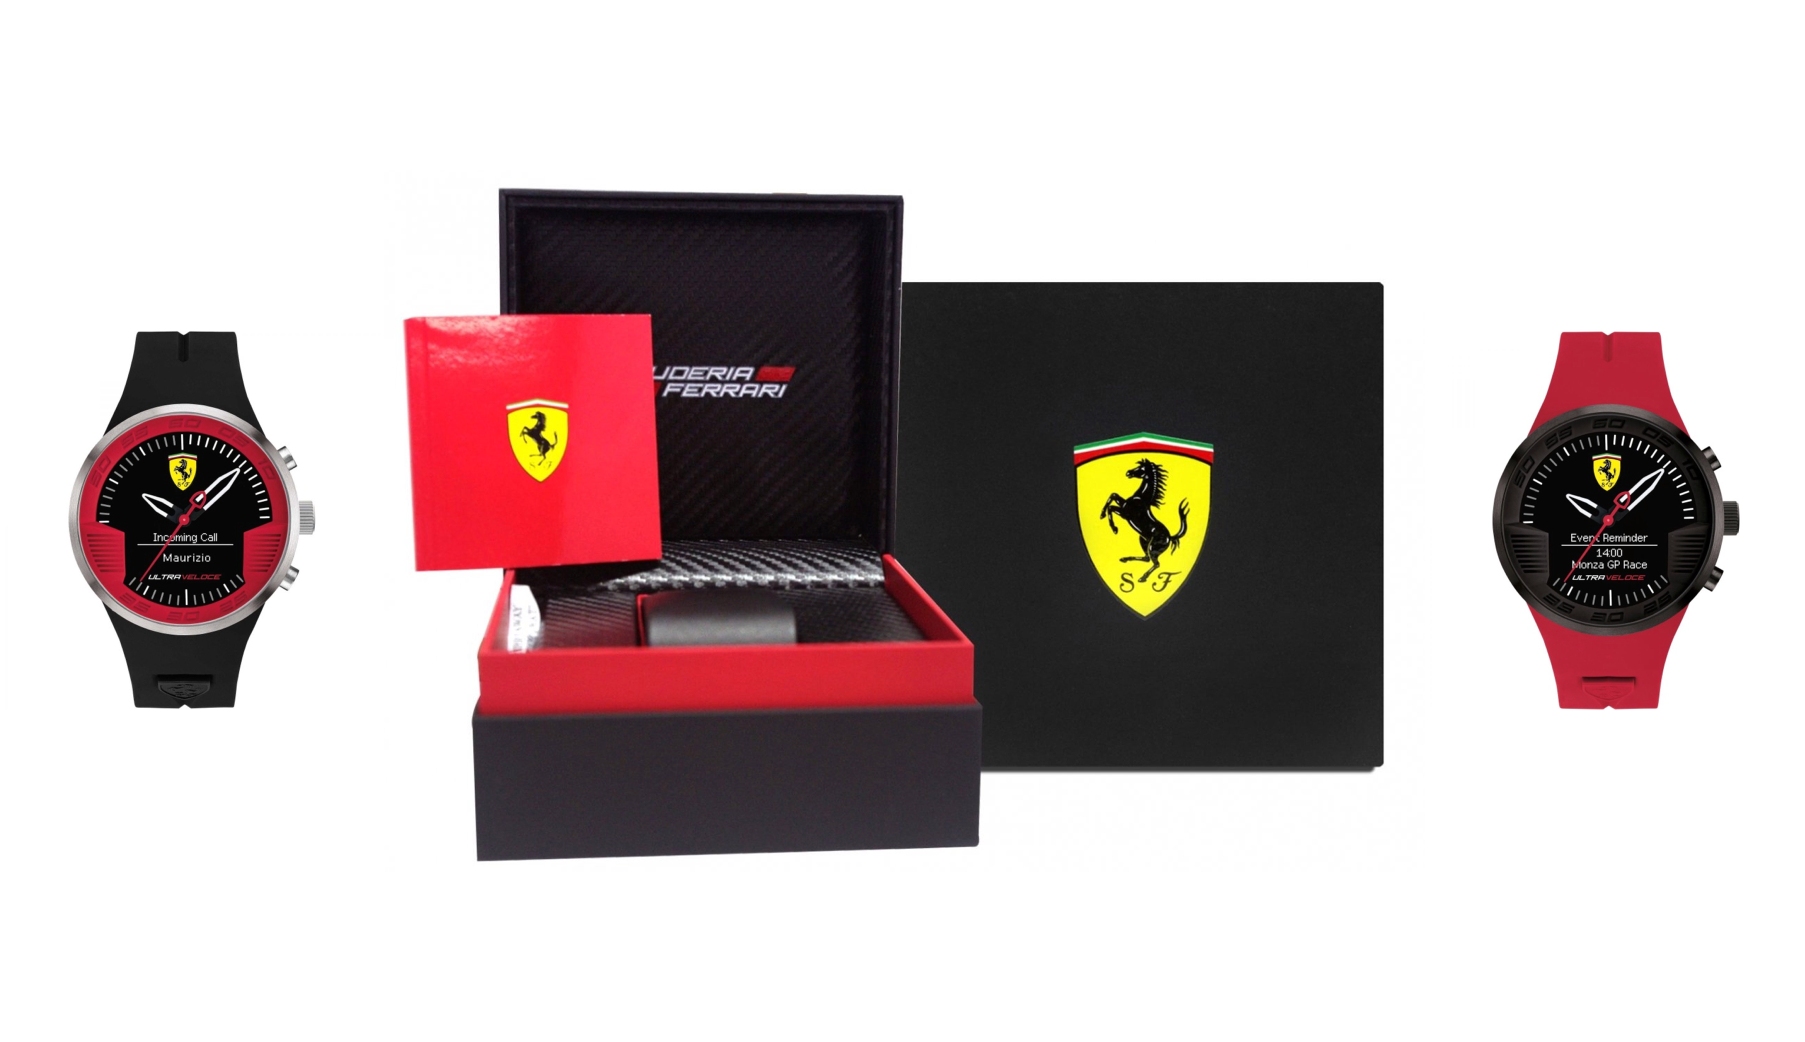 Scheda Tecnica Scuderia Ferrari ULTRAVELOCE 46mm Hybrid Smartwatch